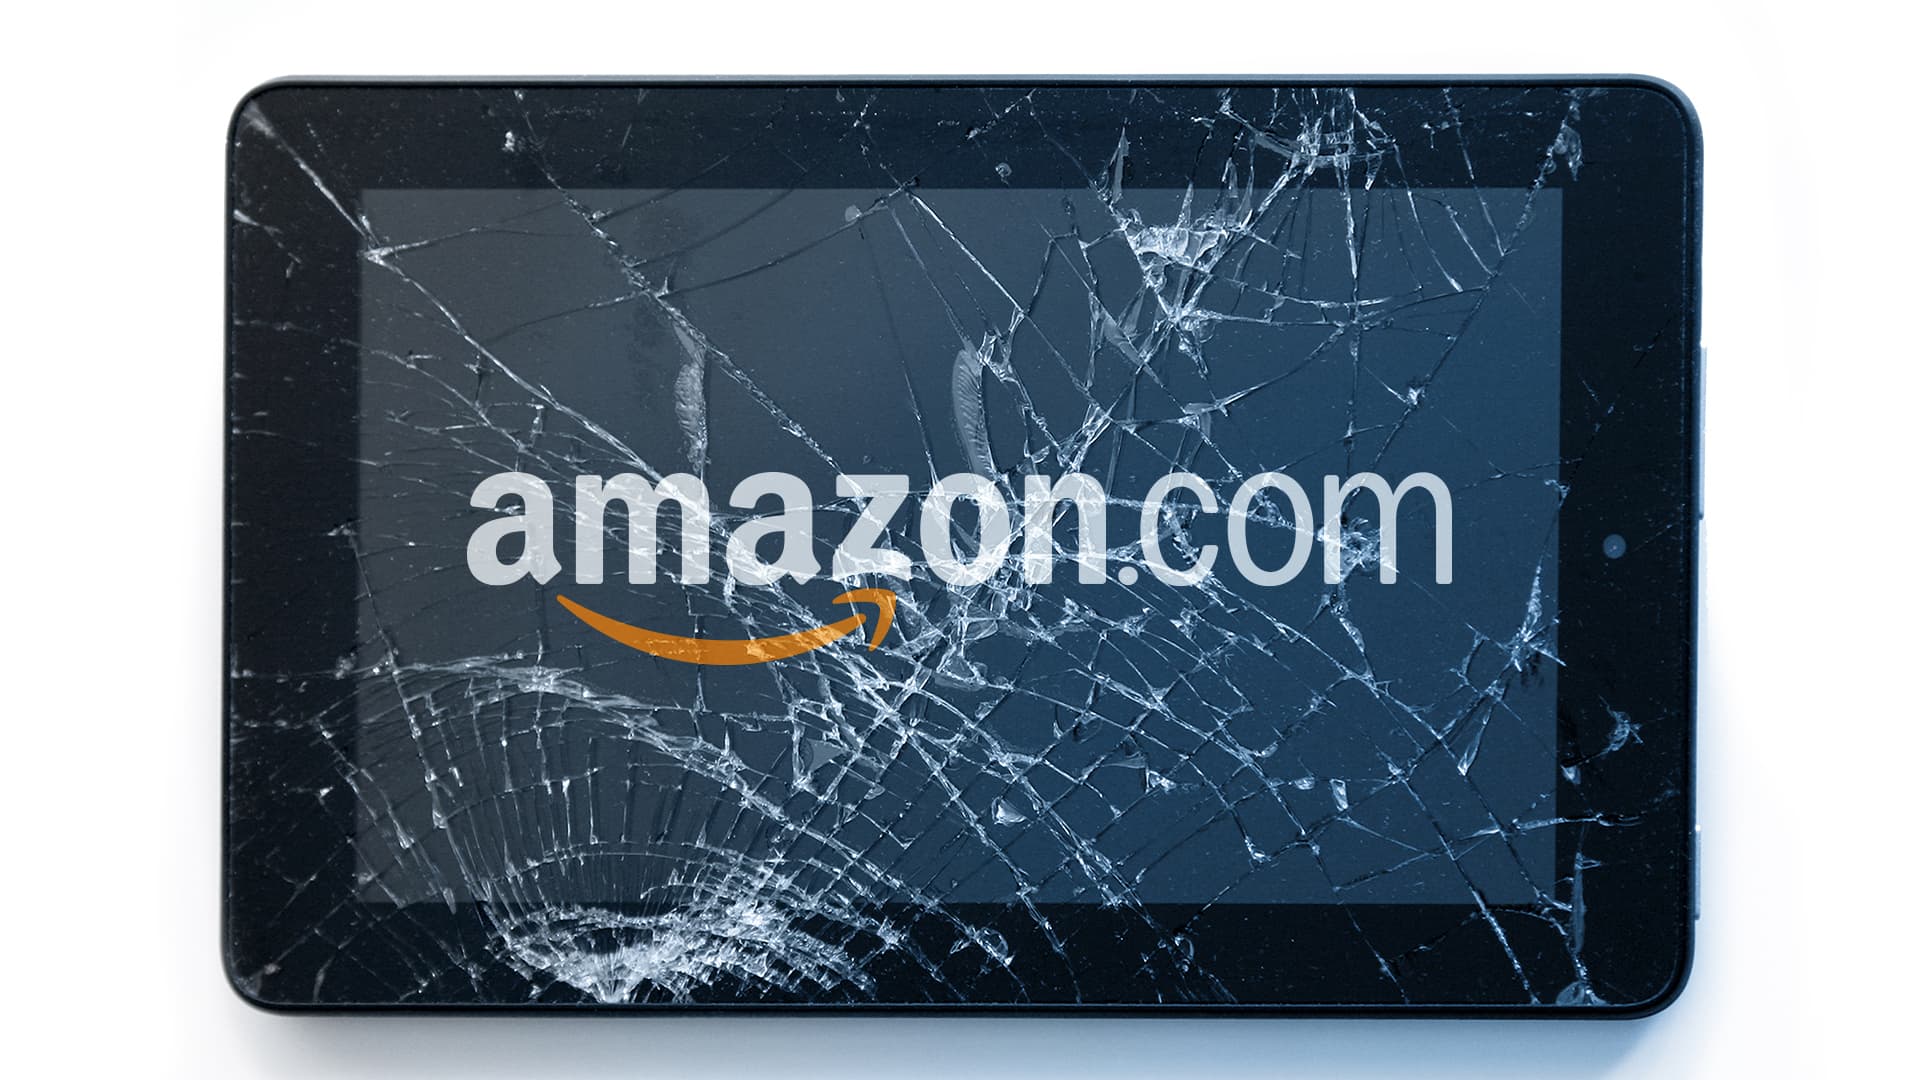 Broken Amazon tablet